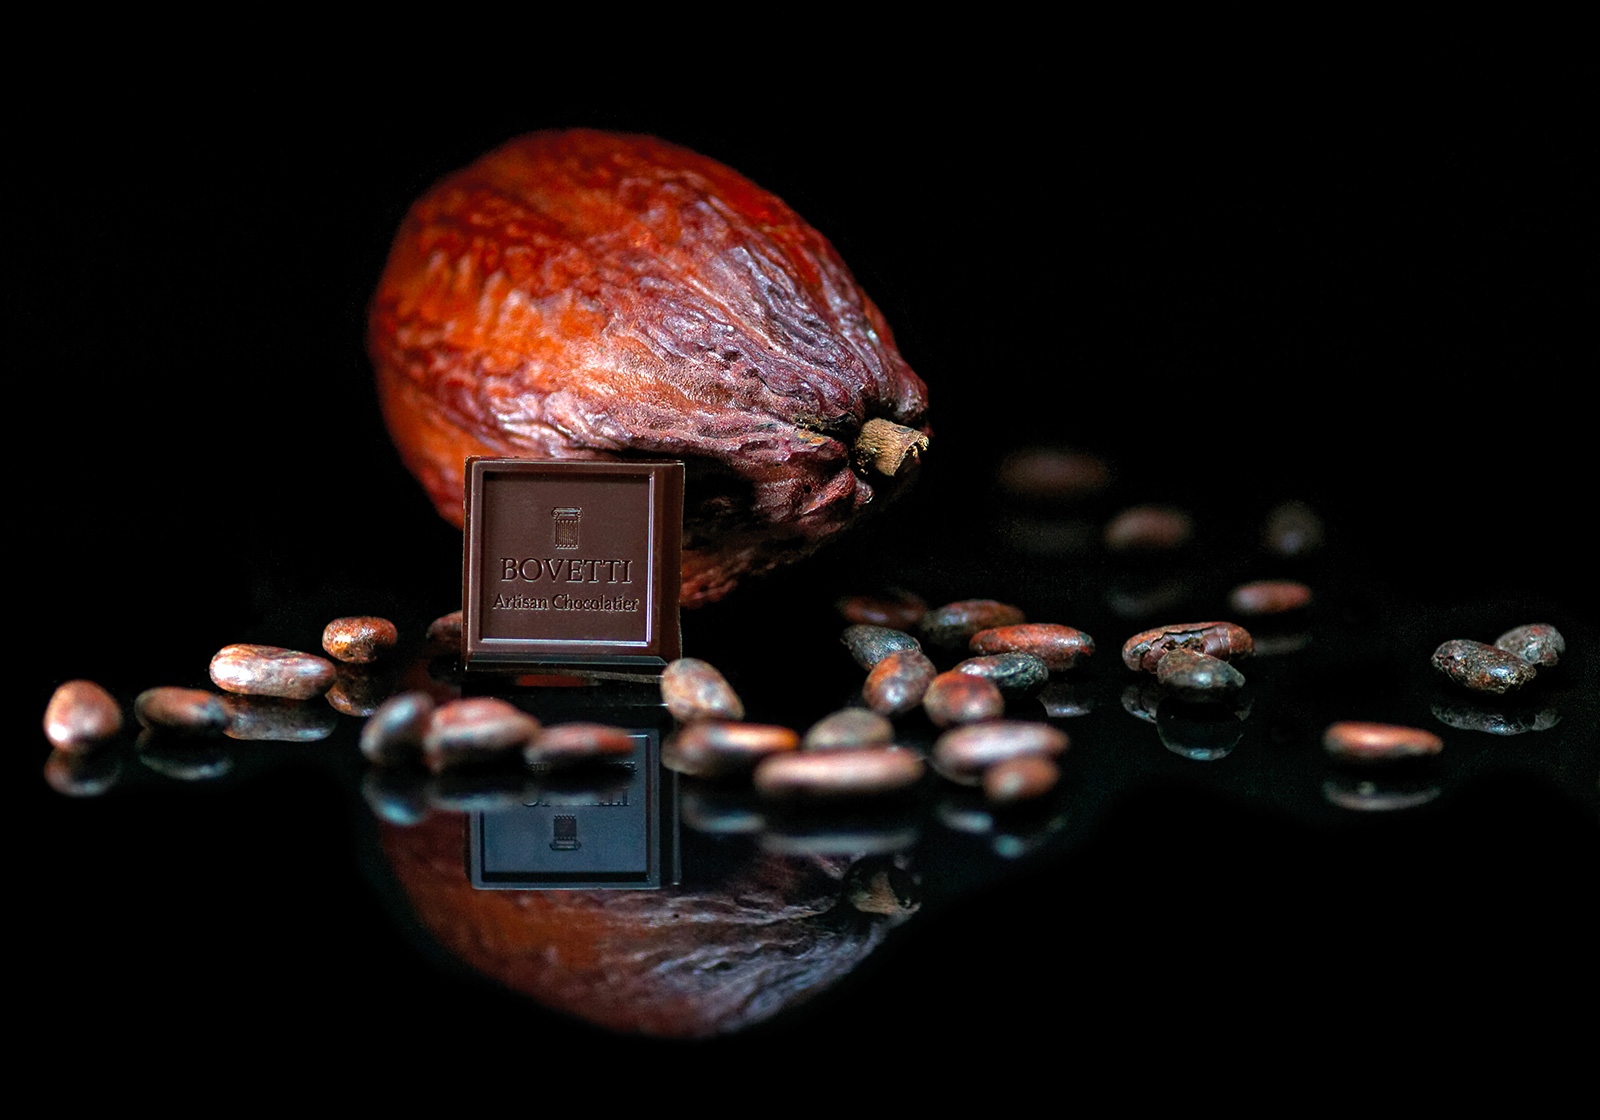 Bovetti Chocolats